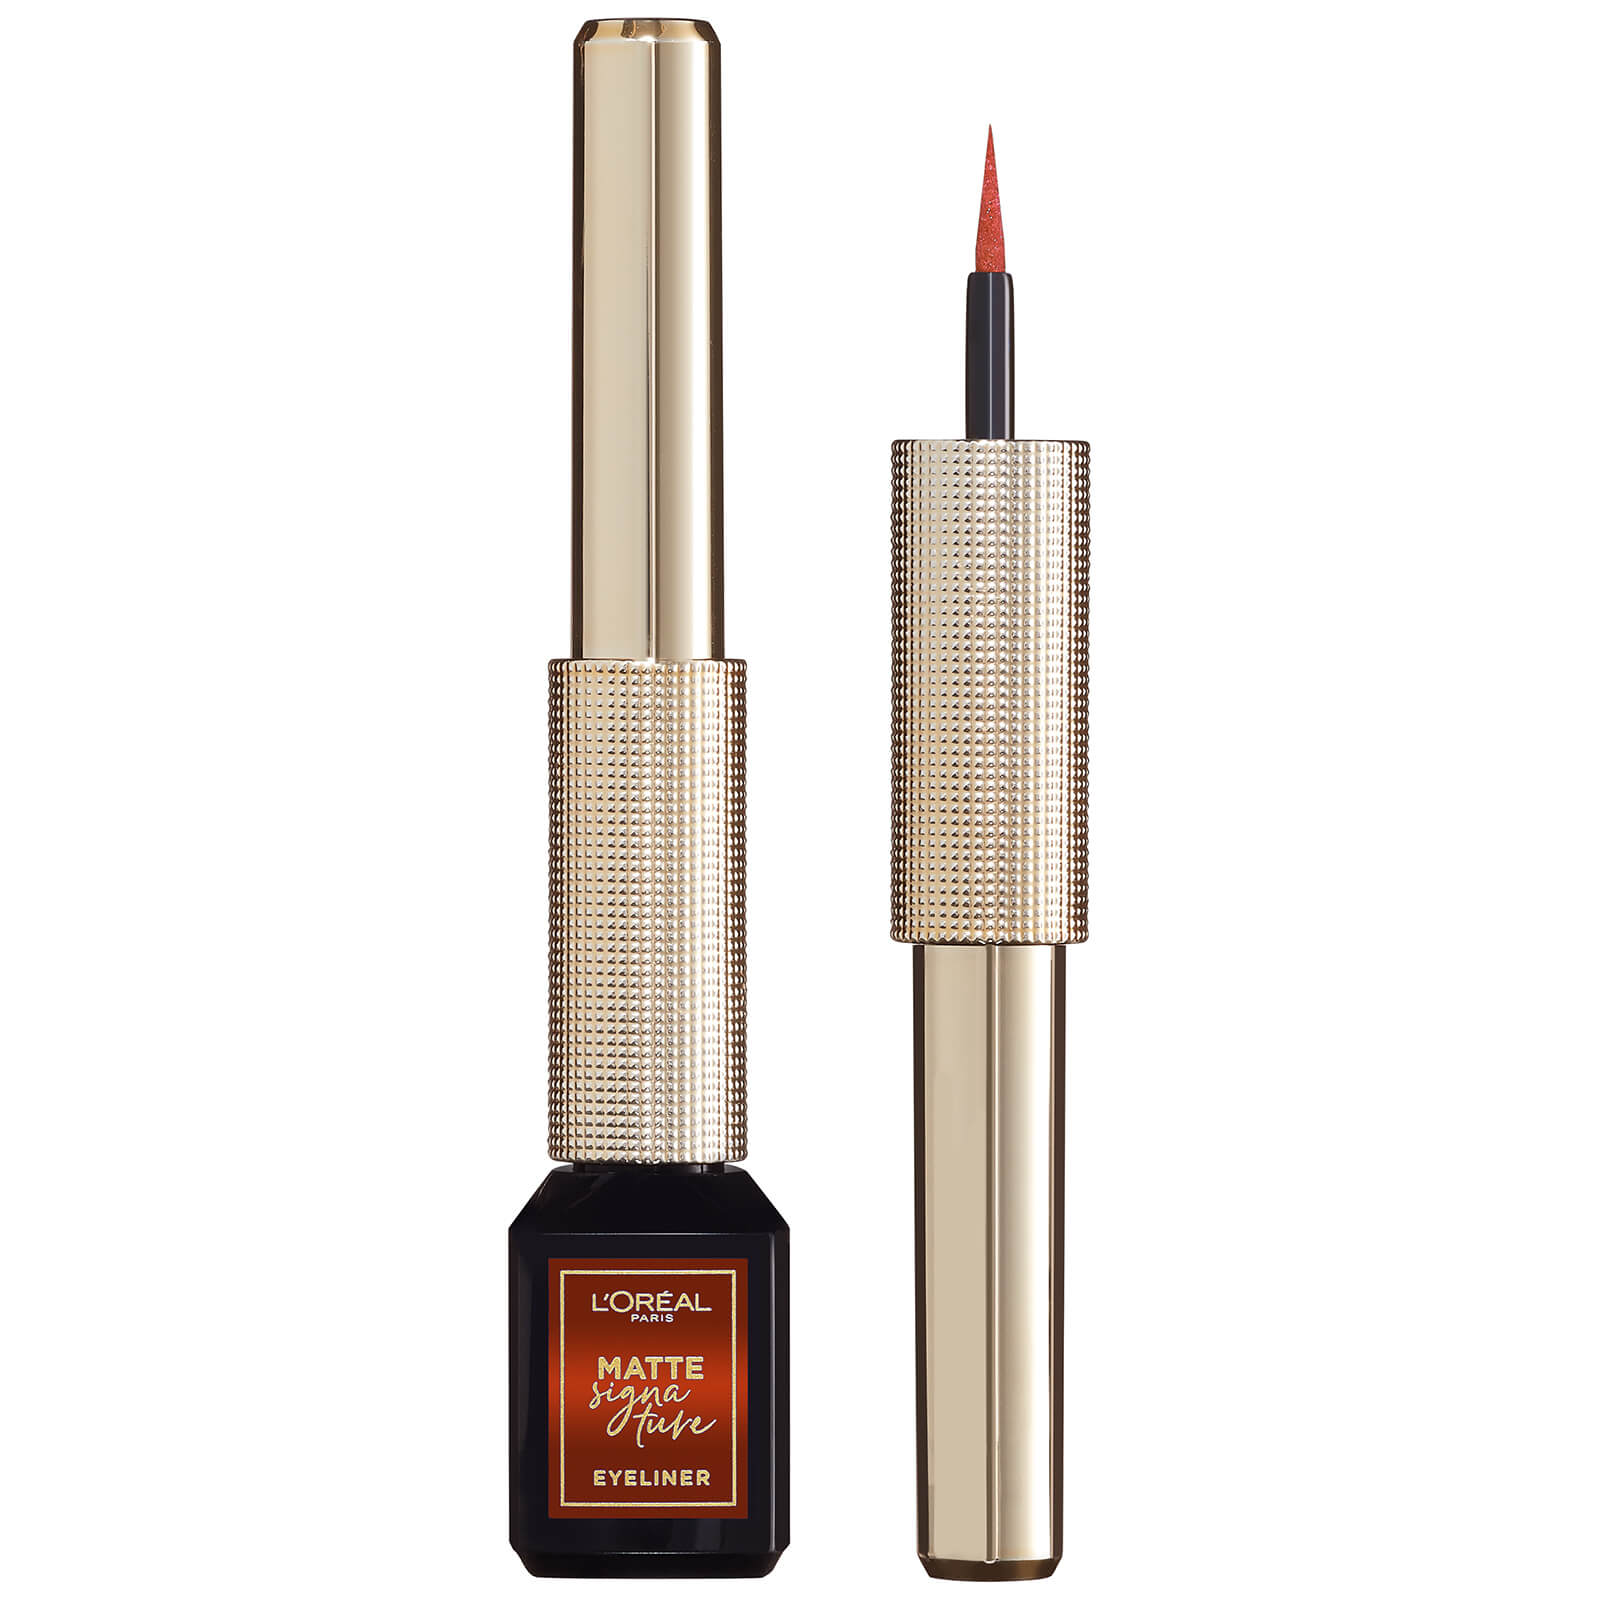 L'Oréal Paris Matte Signature Liquid Eyeliner 3ml (Various Shades) - 07 Copper